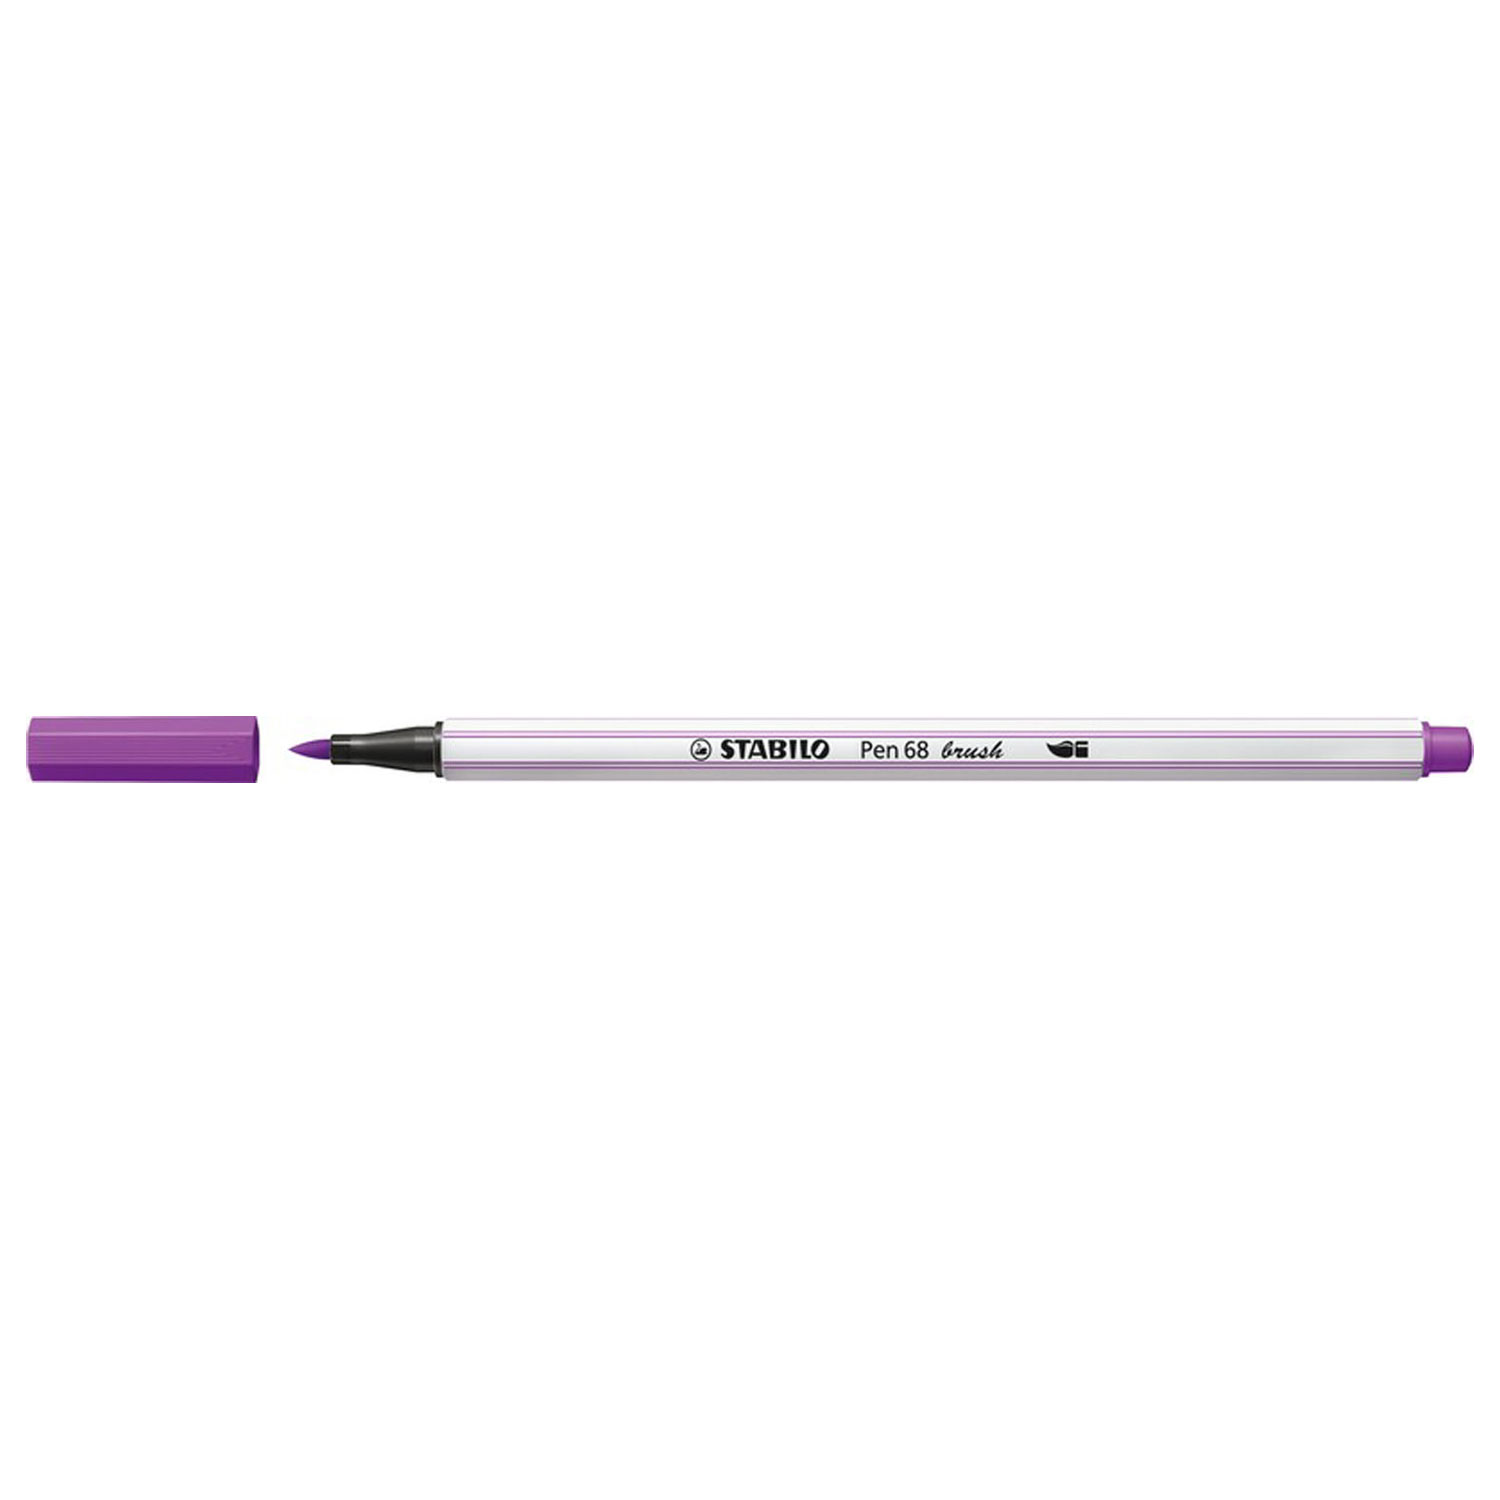 STABILO Pen 68 Brush - Feutre - Lilas (58)